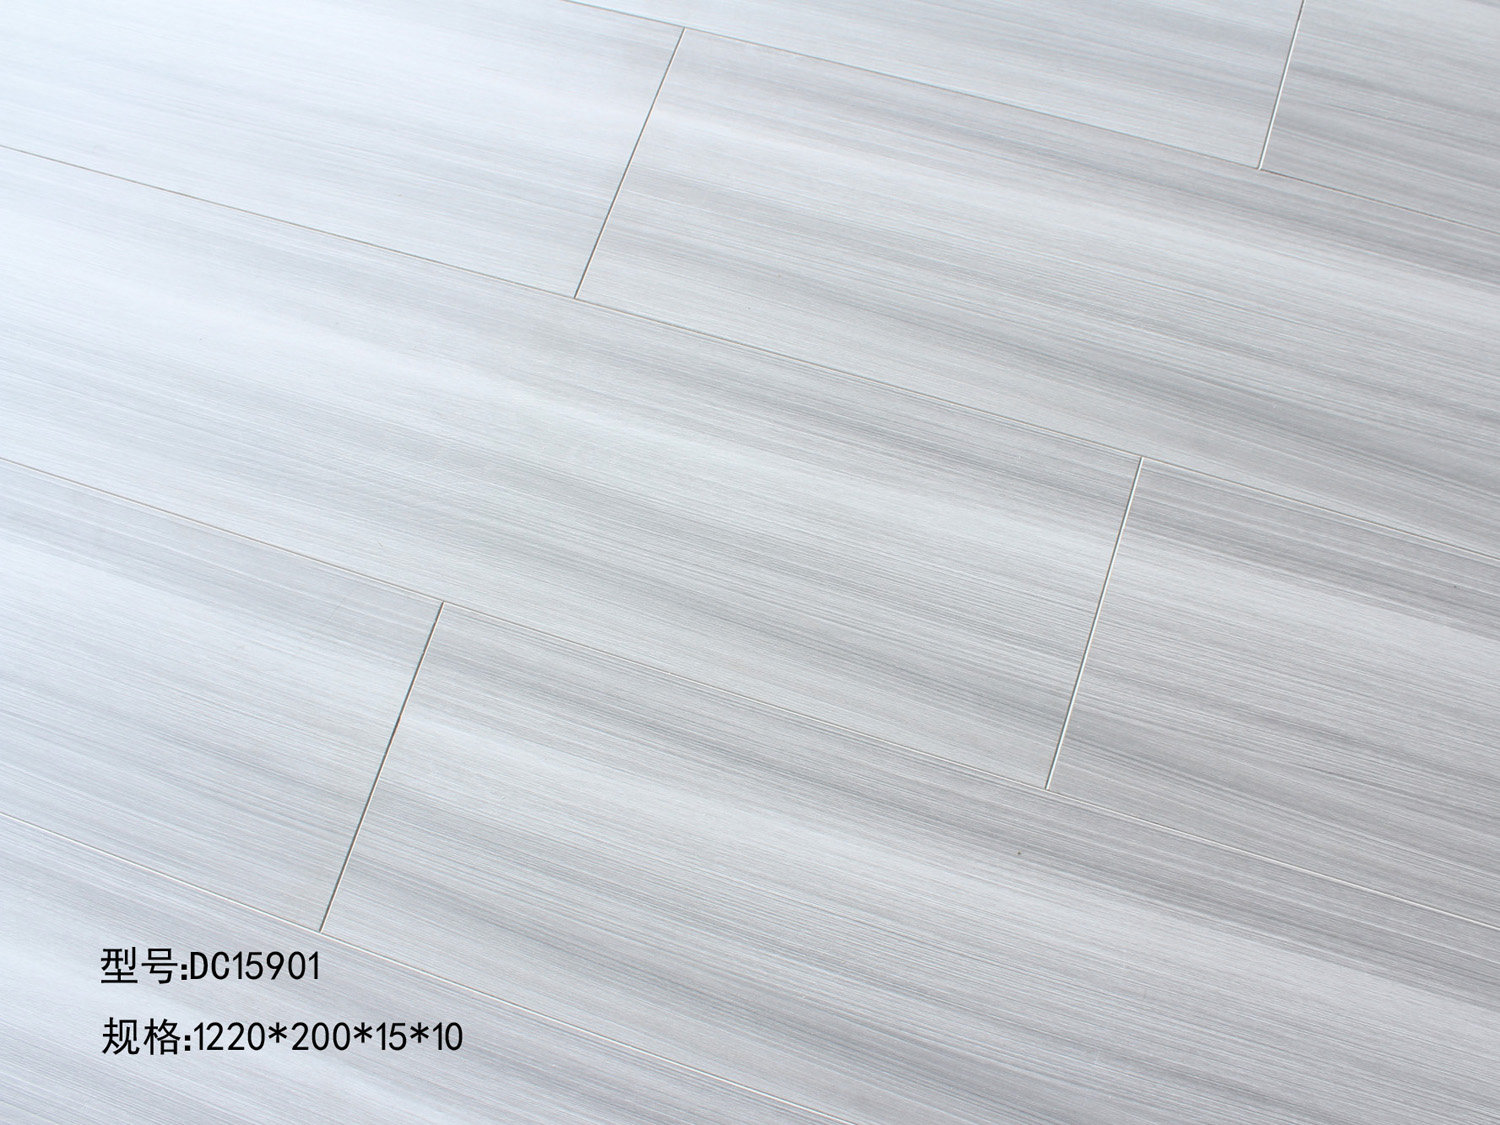 DC15901 新三层实木地板效果图 整板拼板基材 强化面耐磨层